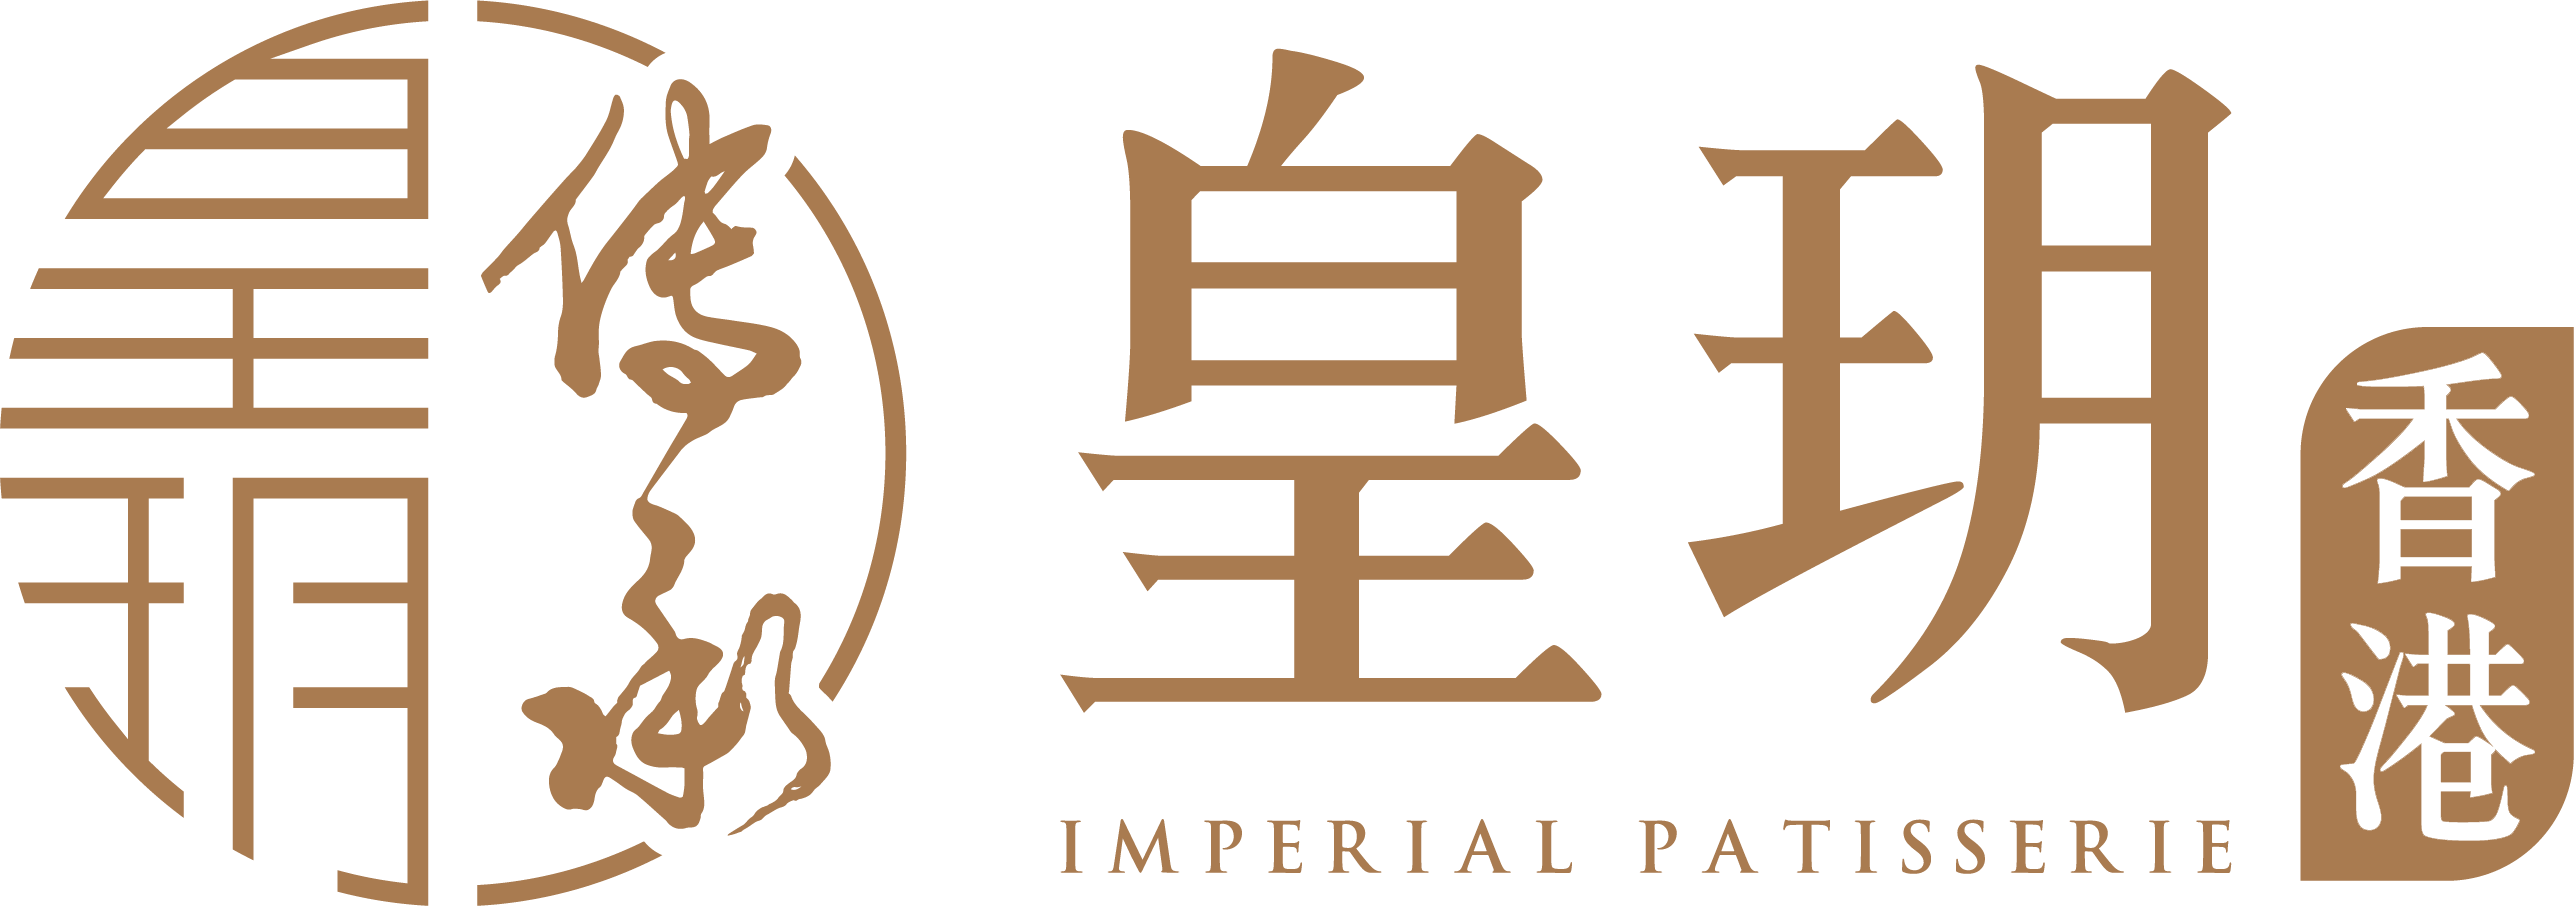 Imperial patisserie